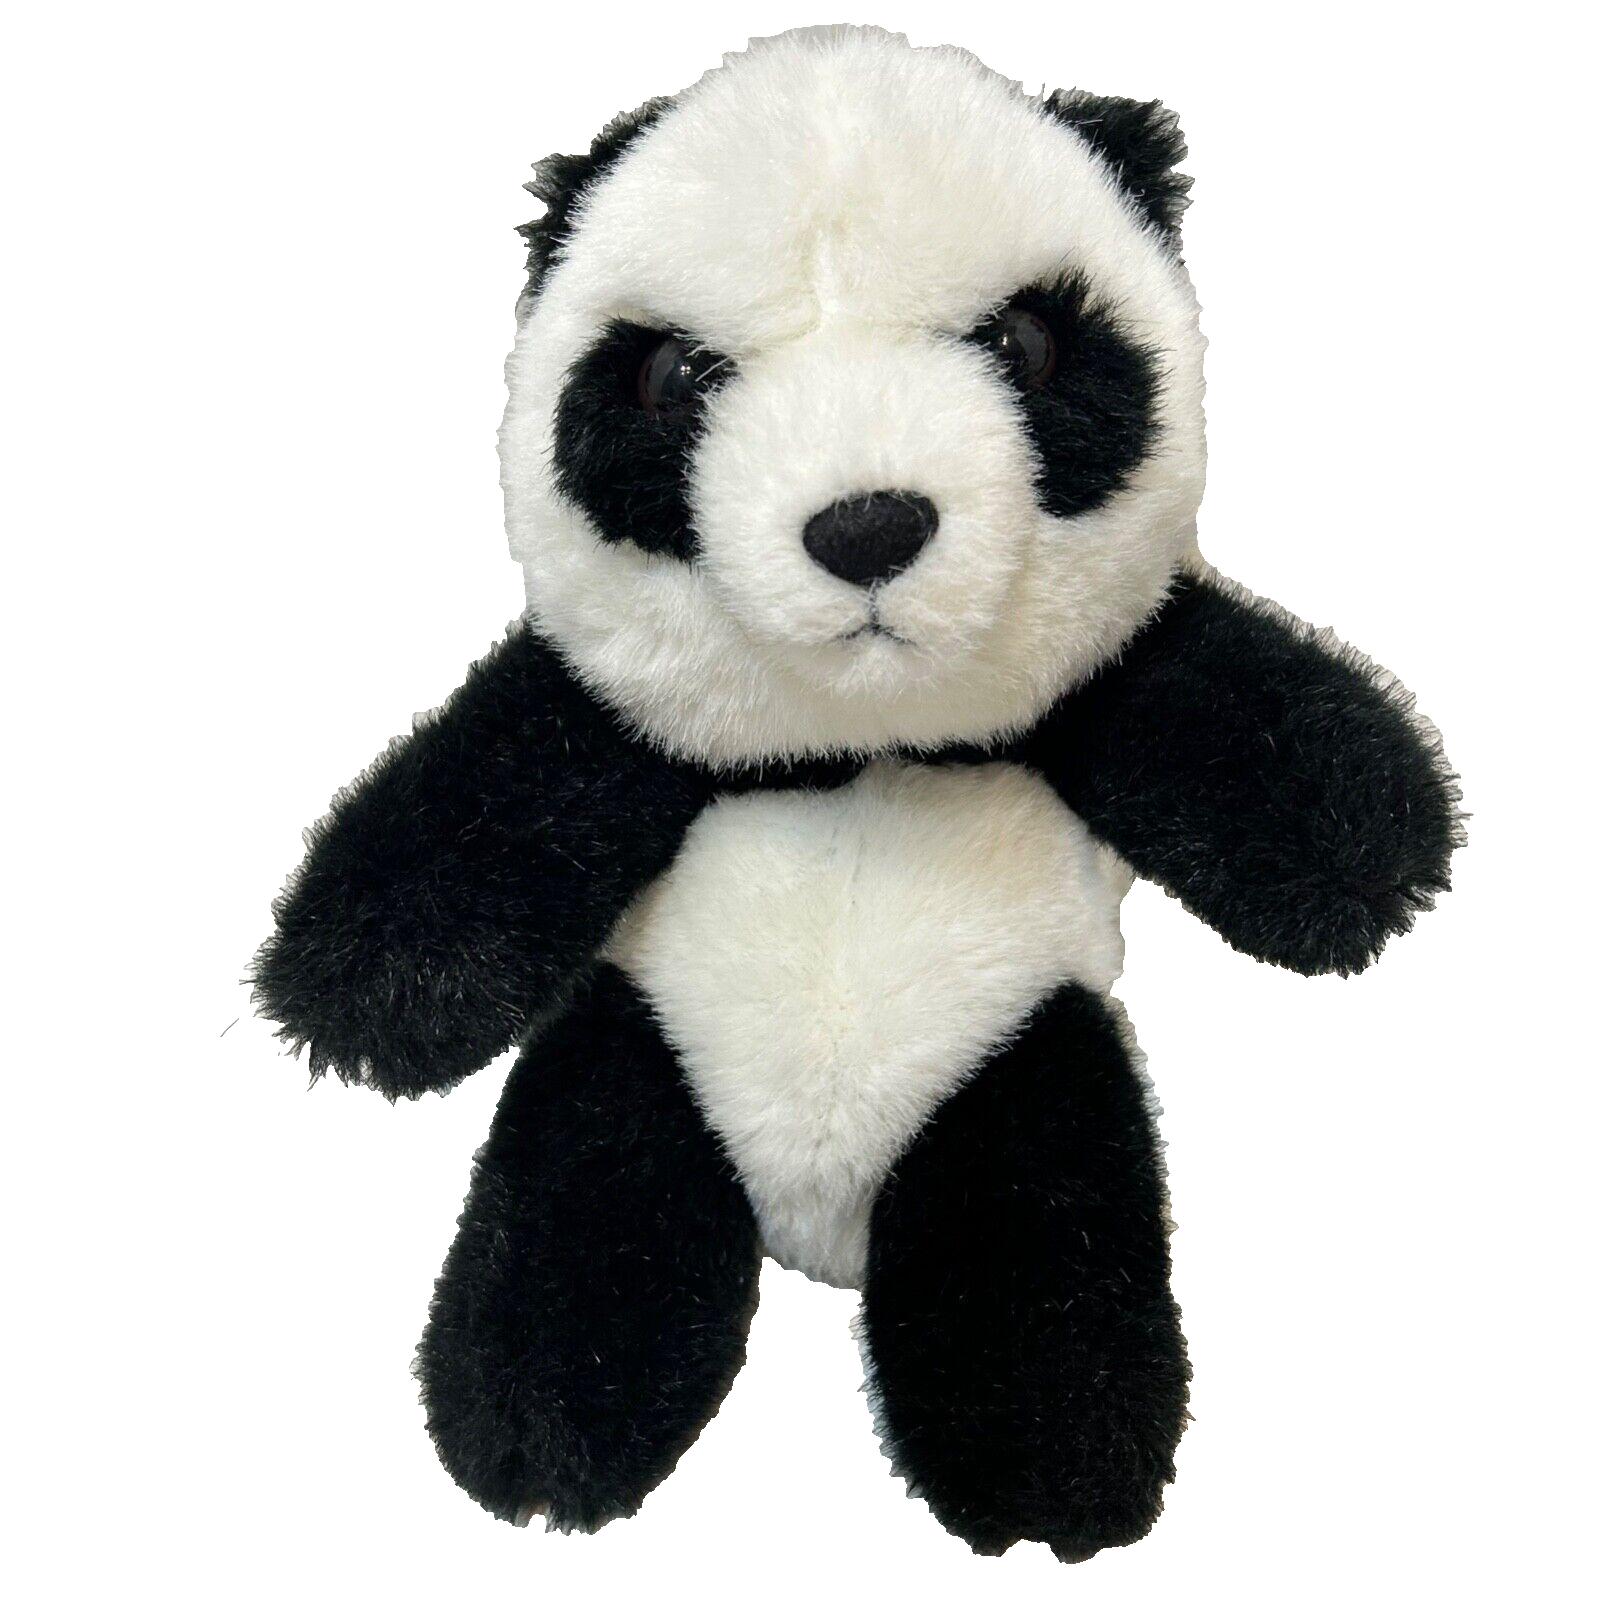 Vintage 1989 World Wildlife Fund Plush Black White Panda Bear Stuffed Animal 7" - $9.03